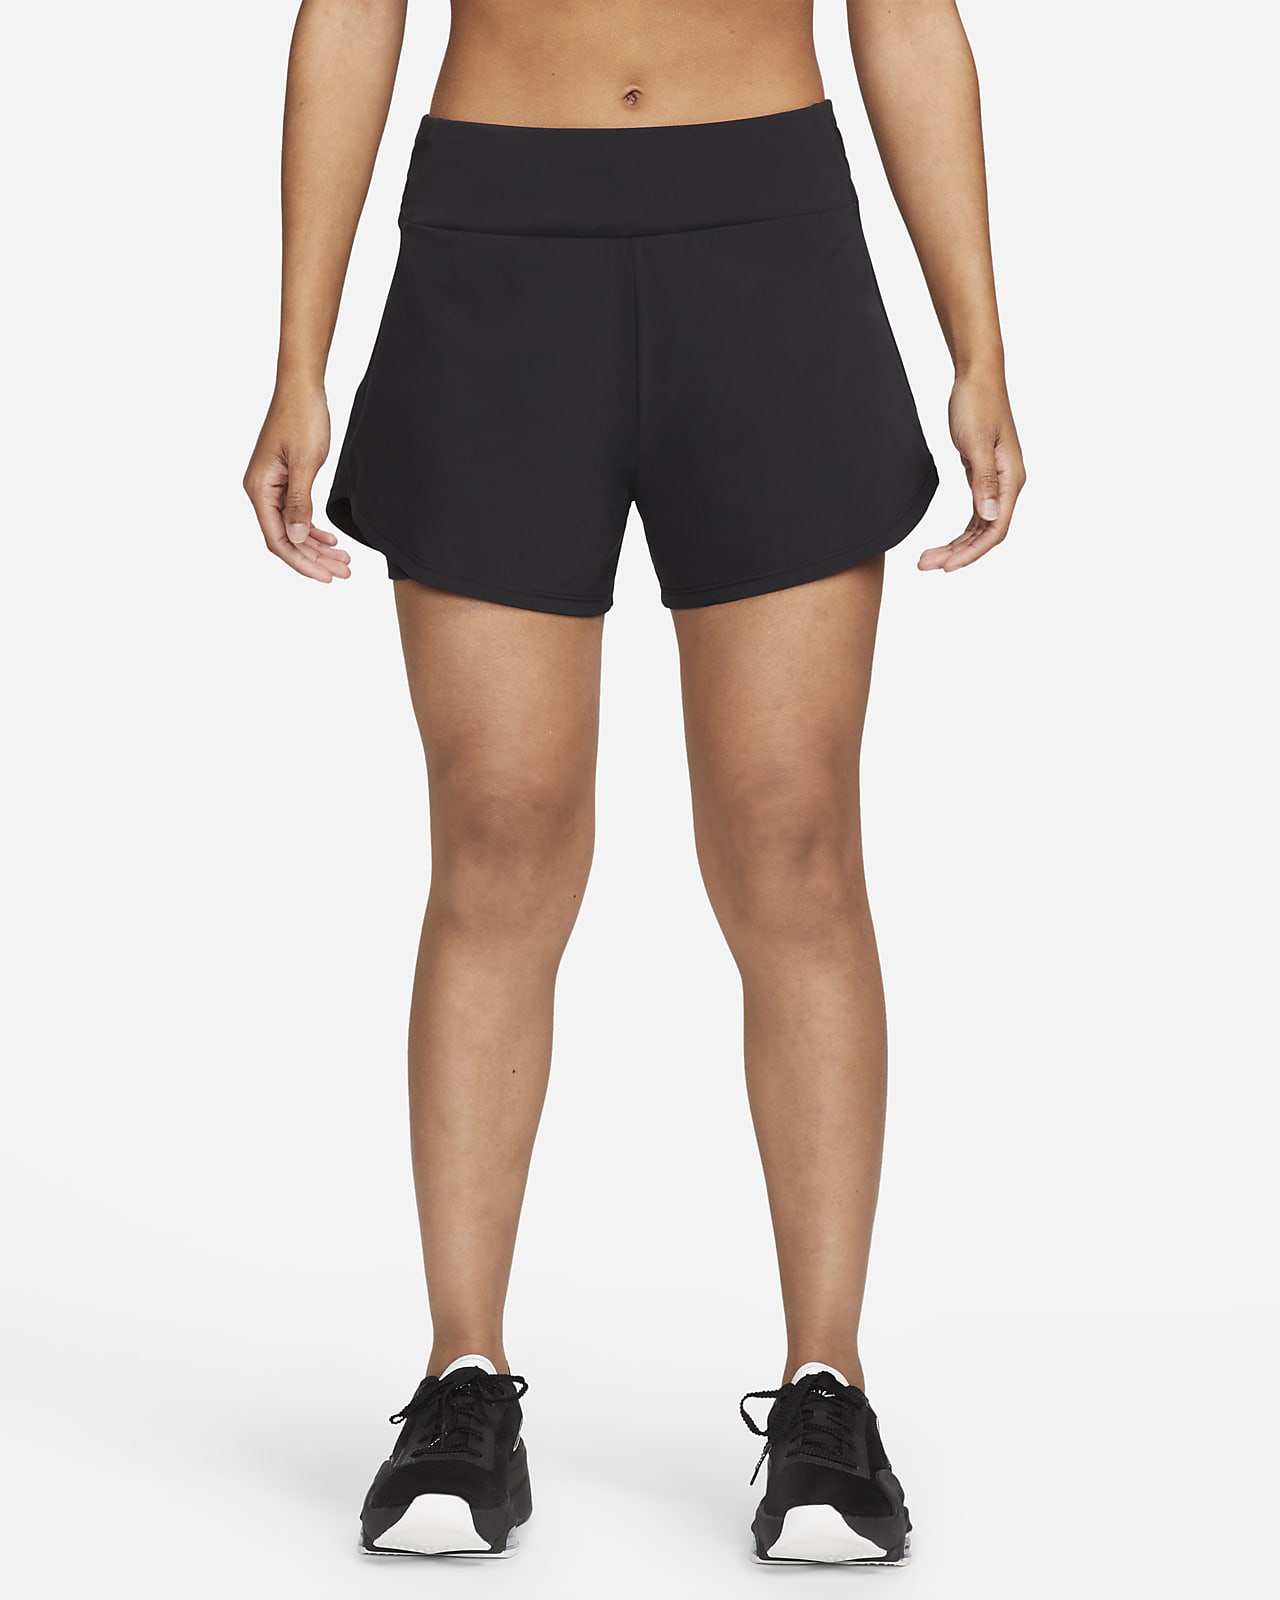 Nike Dri-FIT Bliss Women's Mid-Rise 3 2-in-1 Shorts